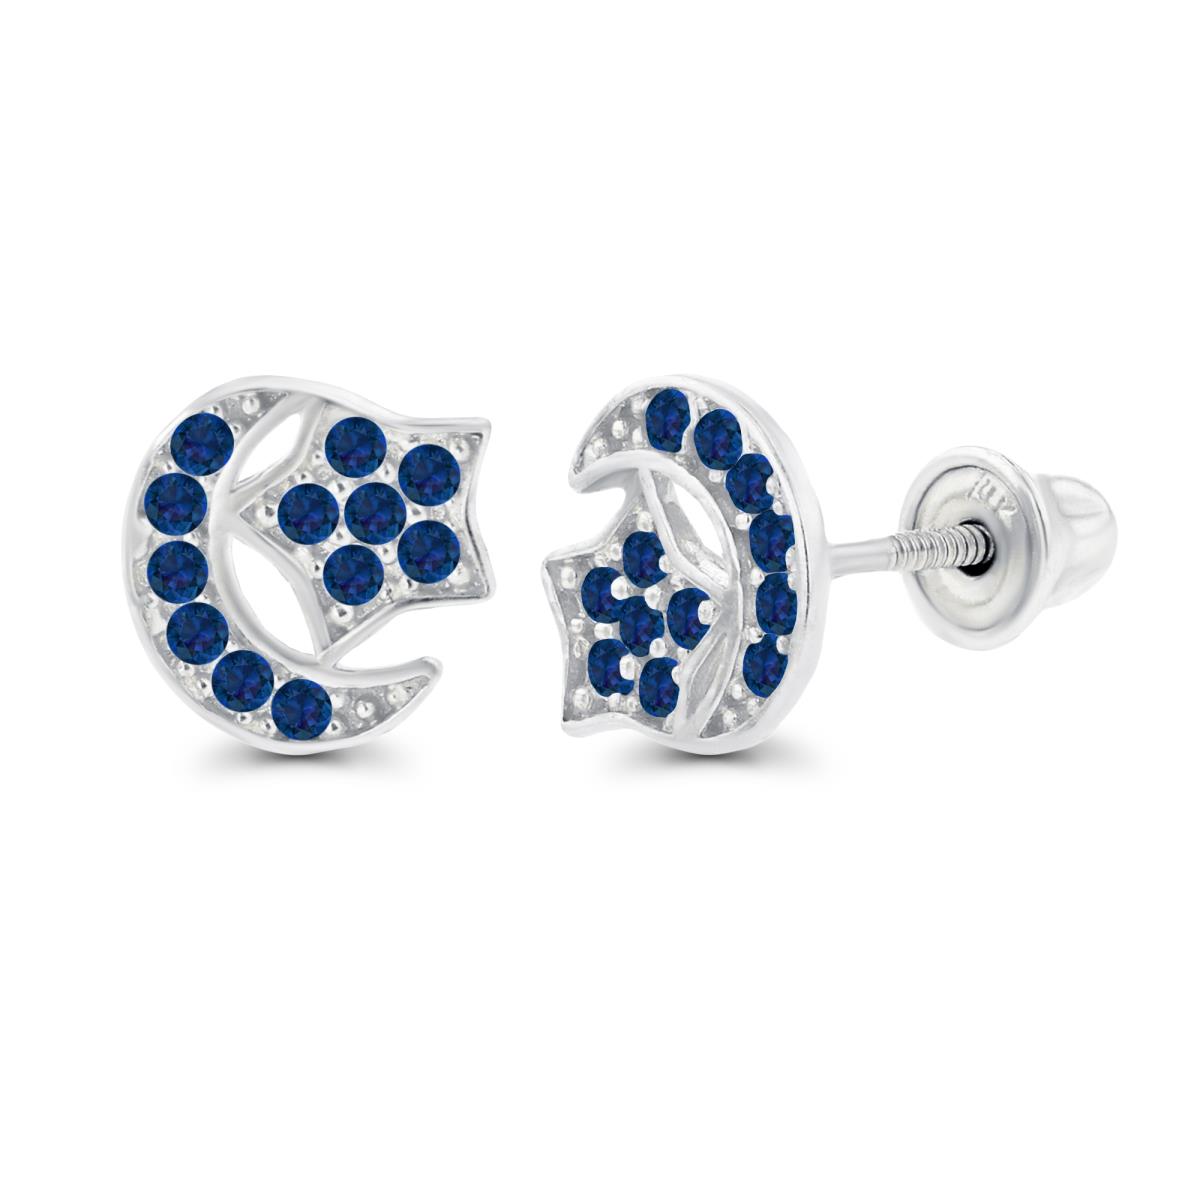 14K White Gold 1mm Round Created Blue Sapphire Moon & Star Screwback Earrings